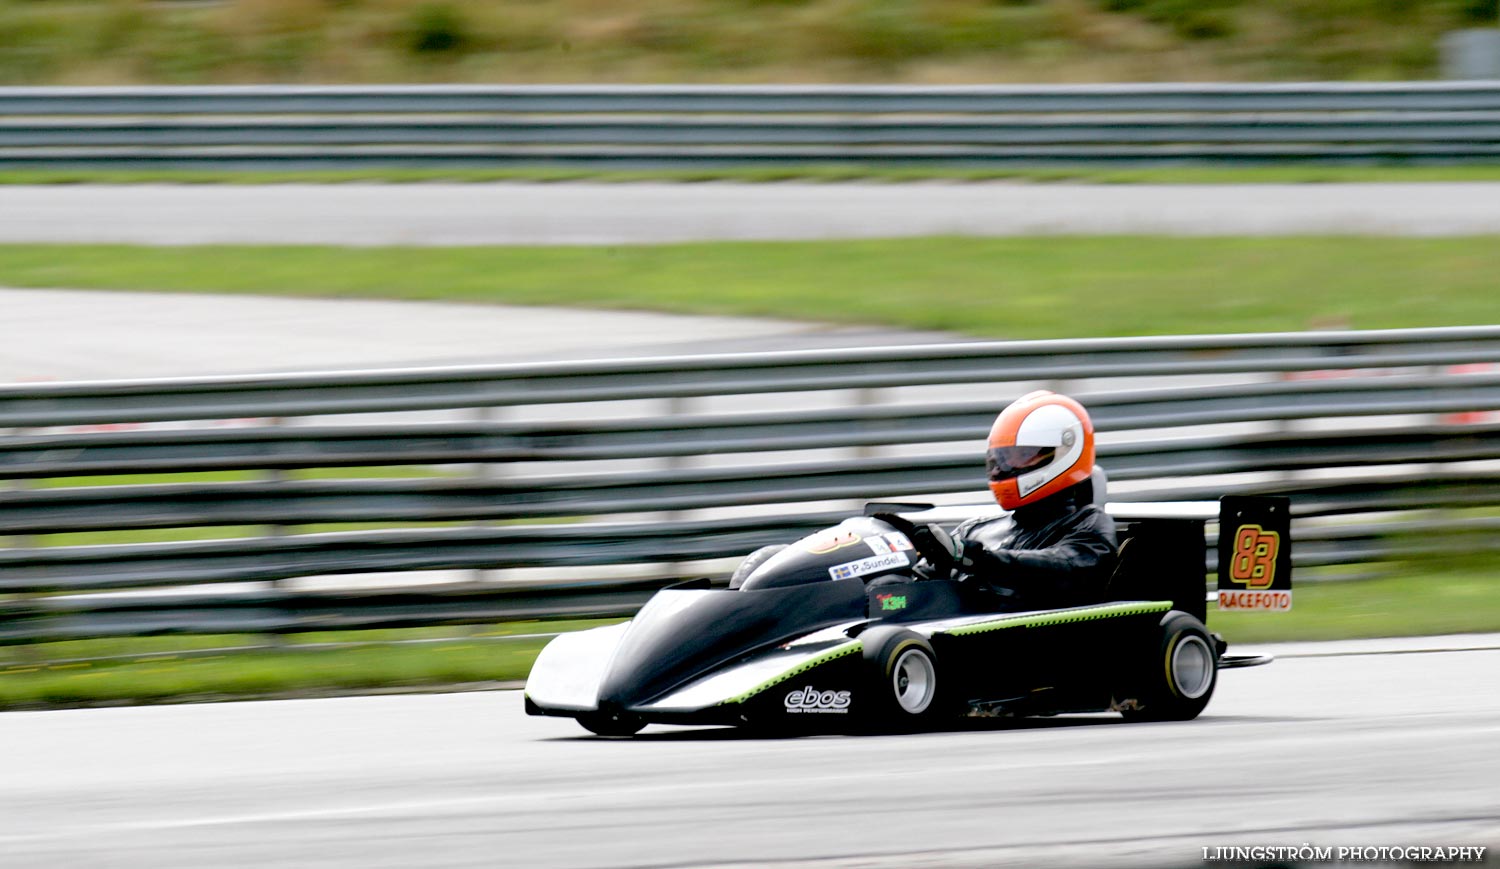 SSK Raceweek,mix,Kinnekulle Ring,Götene,Sverige,Motorsport,,2009,107641